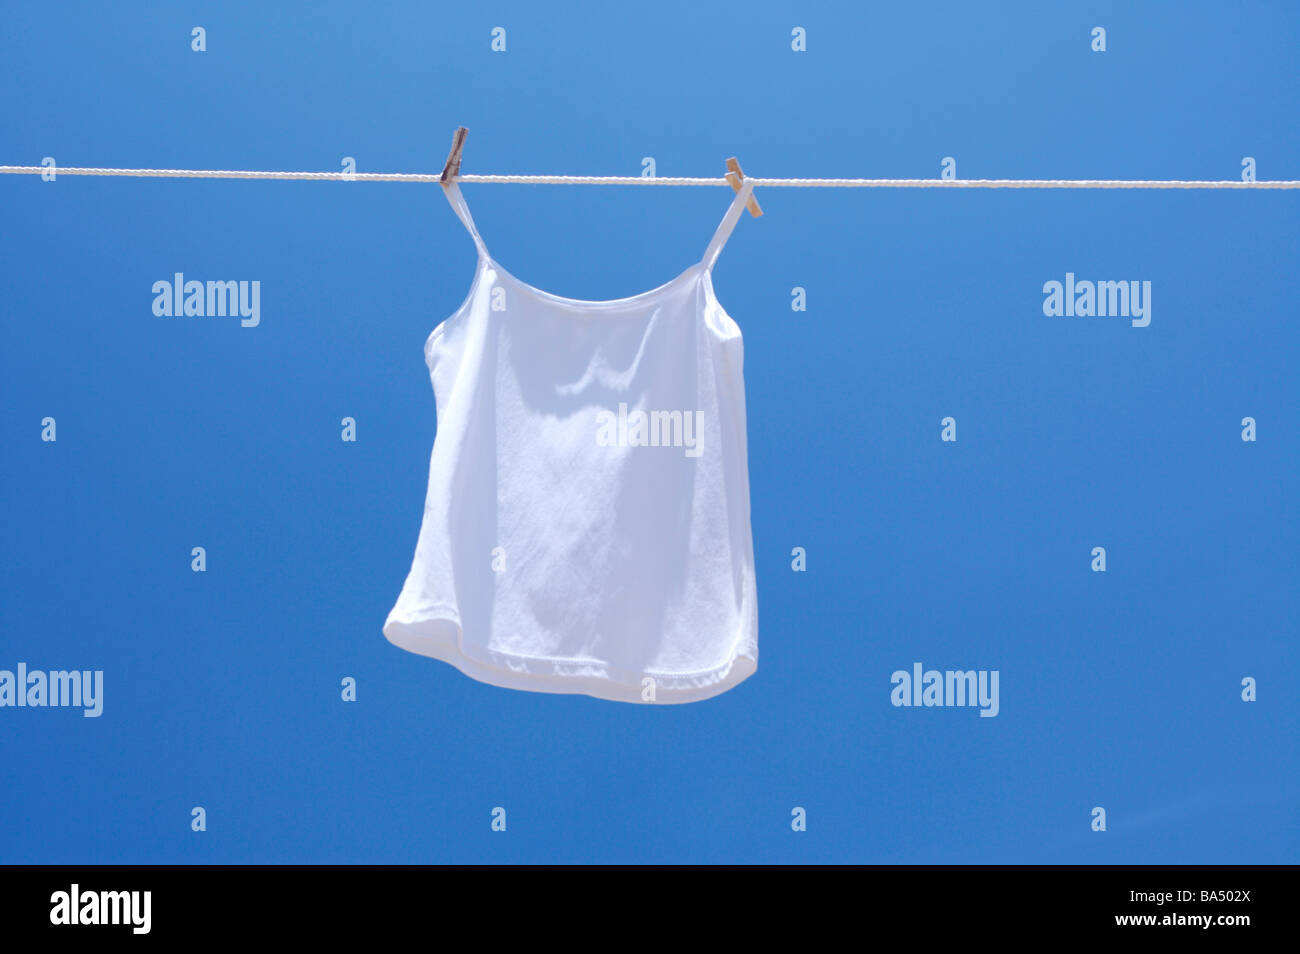 Spaghetti straps hanging on clothesline Stock Photo - Alamy